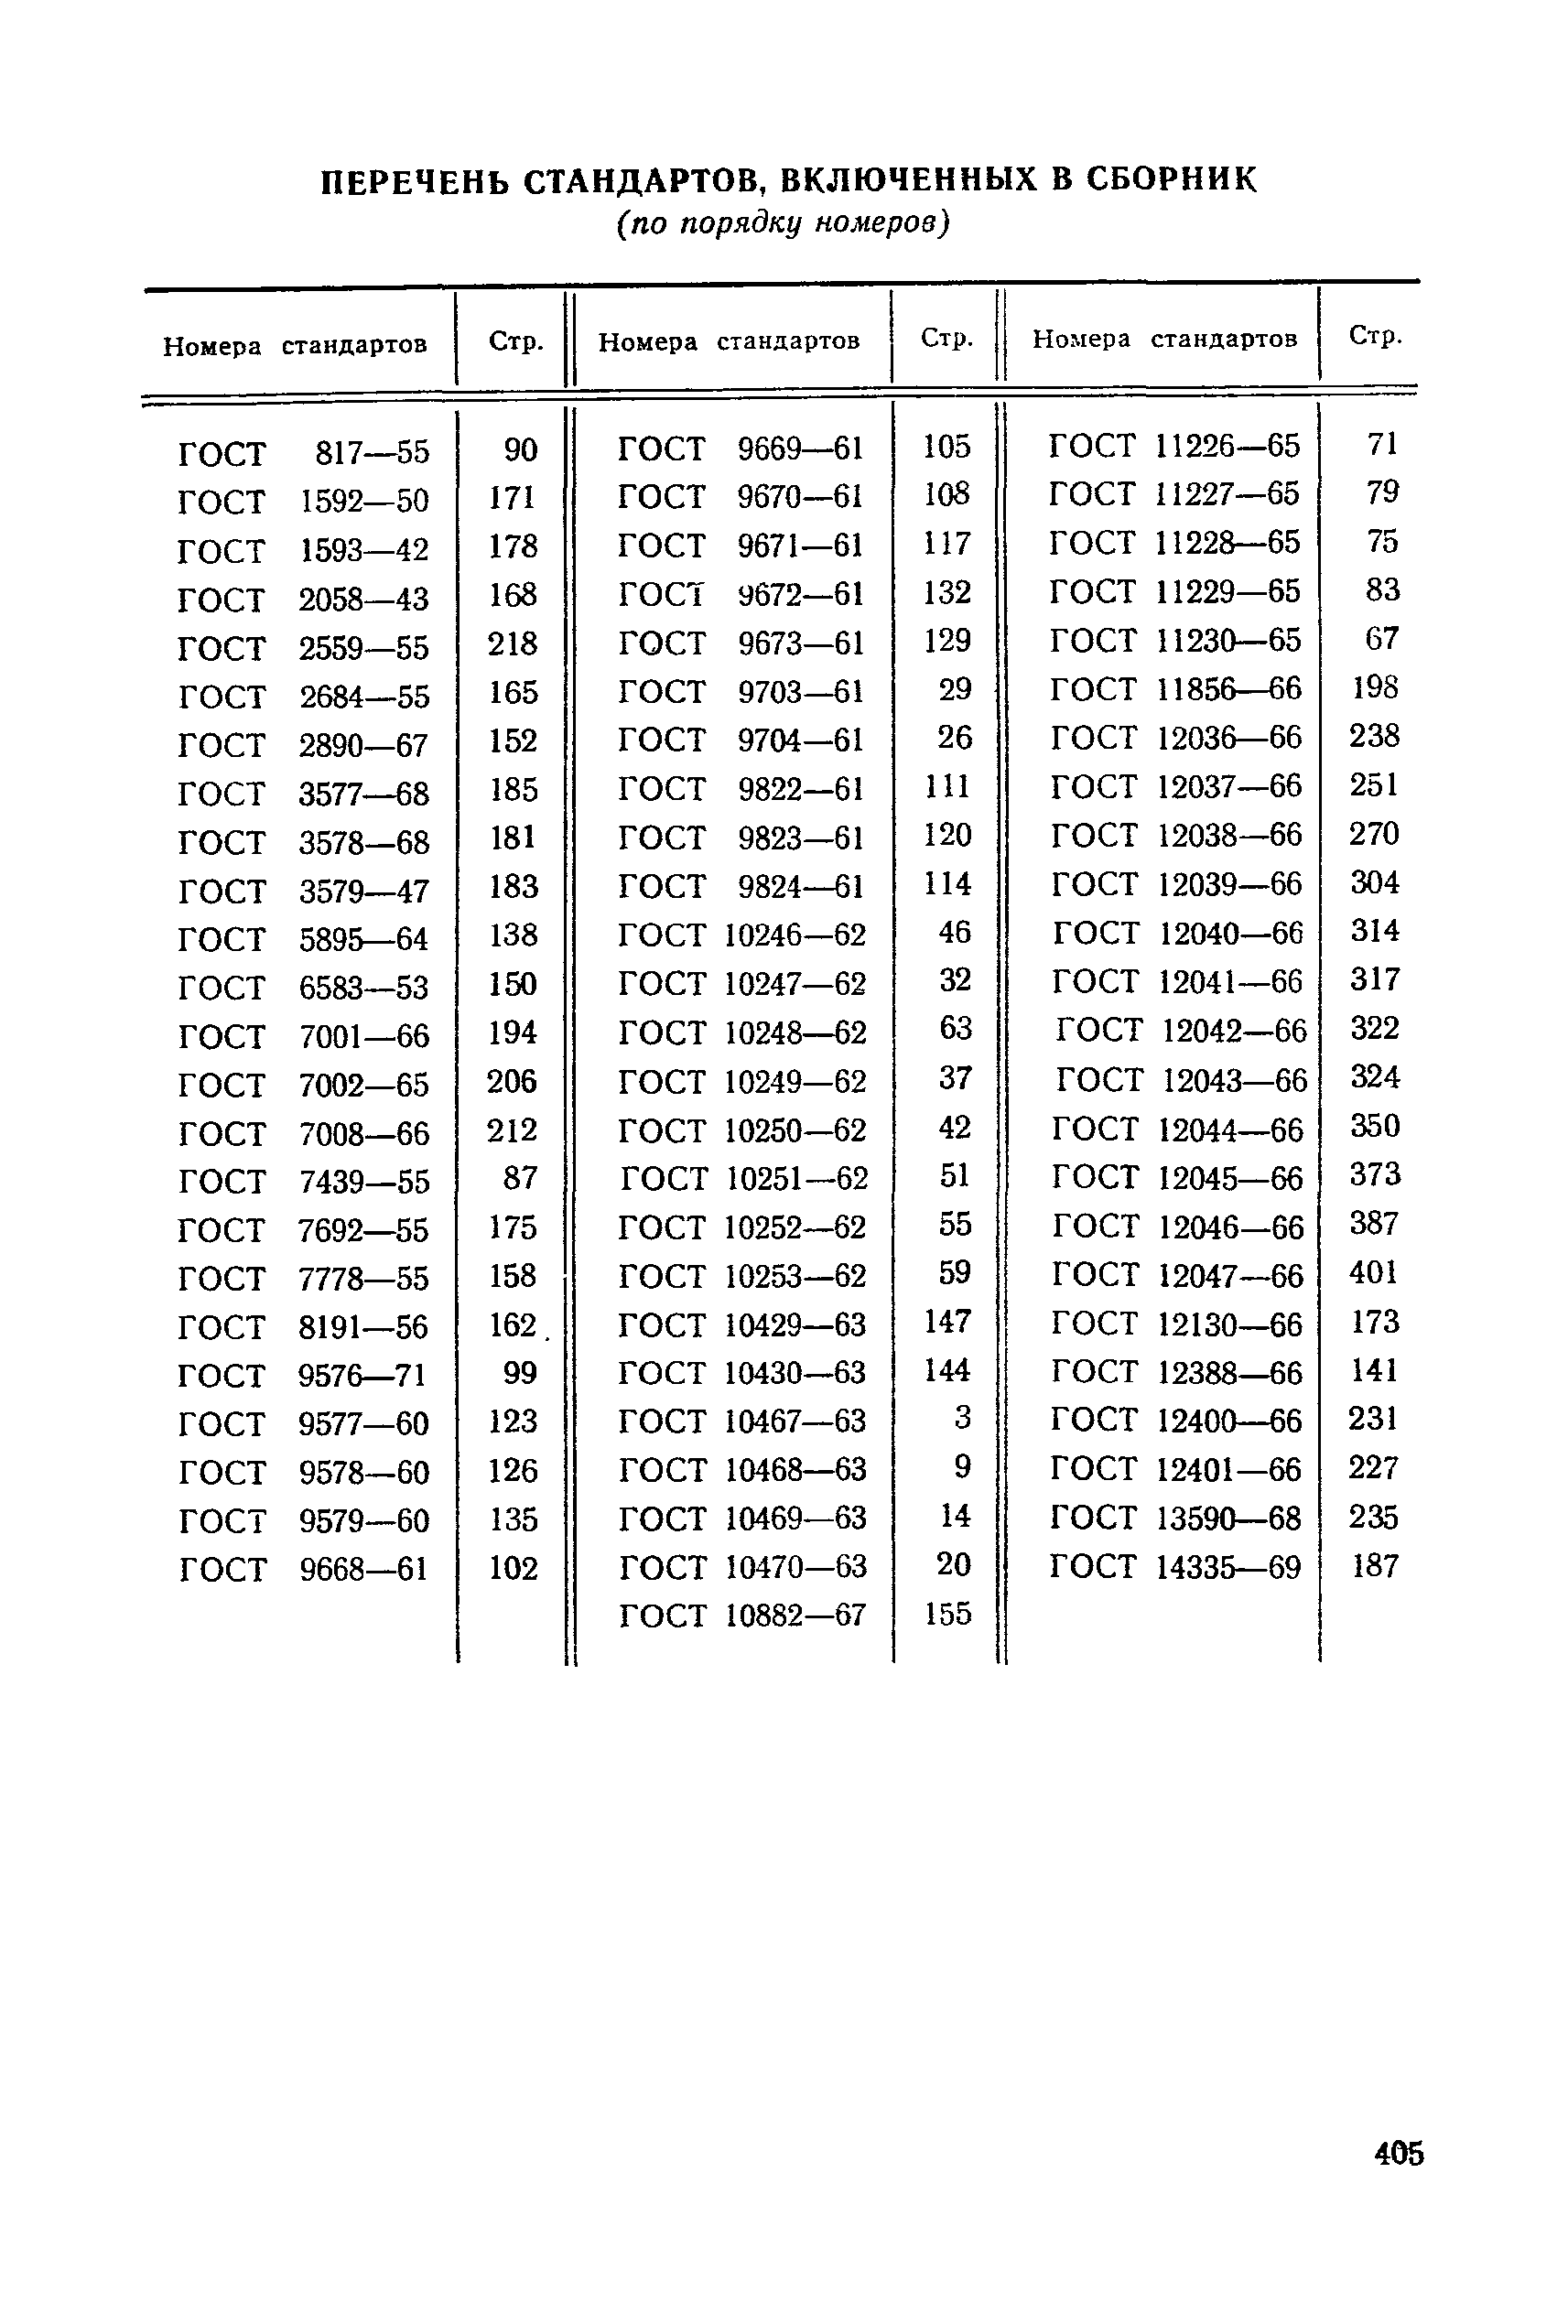 ГОСТ 11227-65